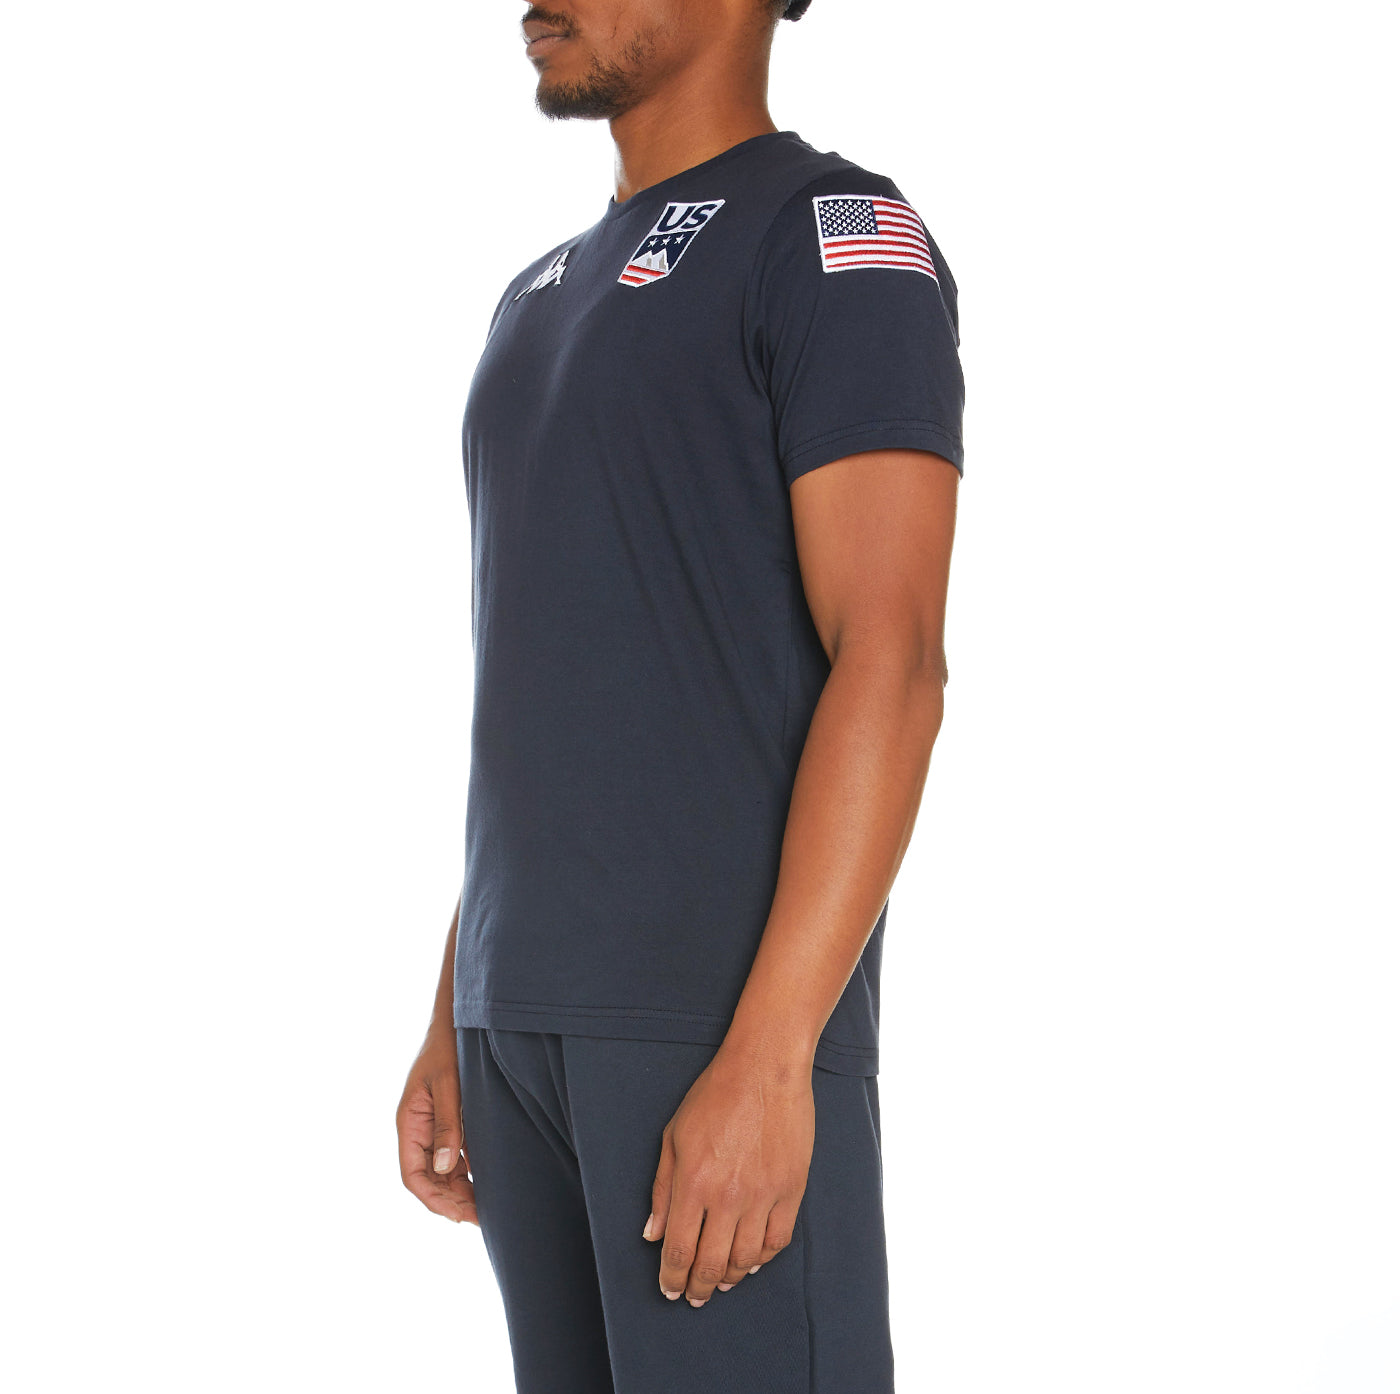 Estessi USA – - Kappa T-Shirt US Navy